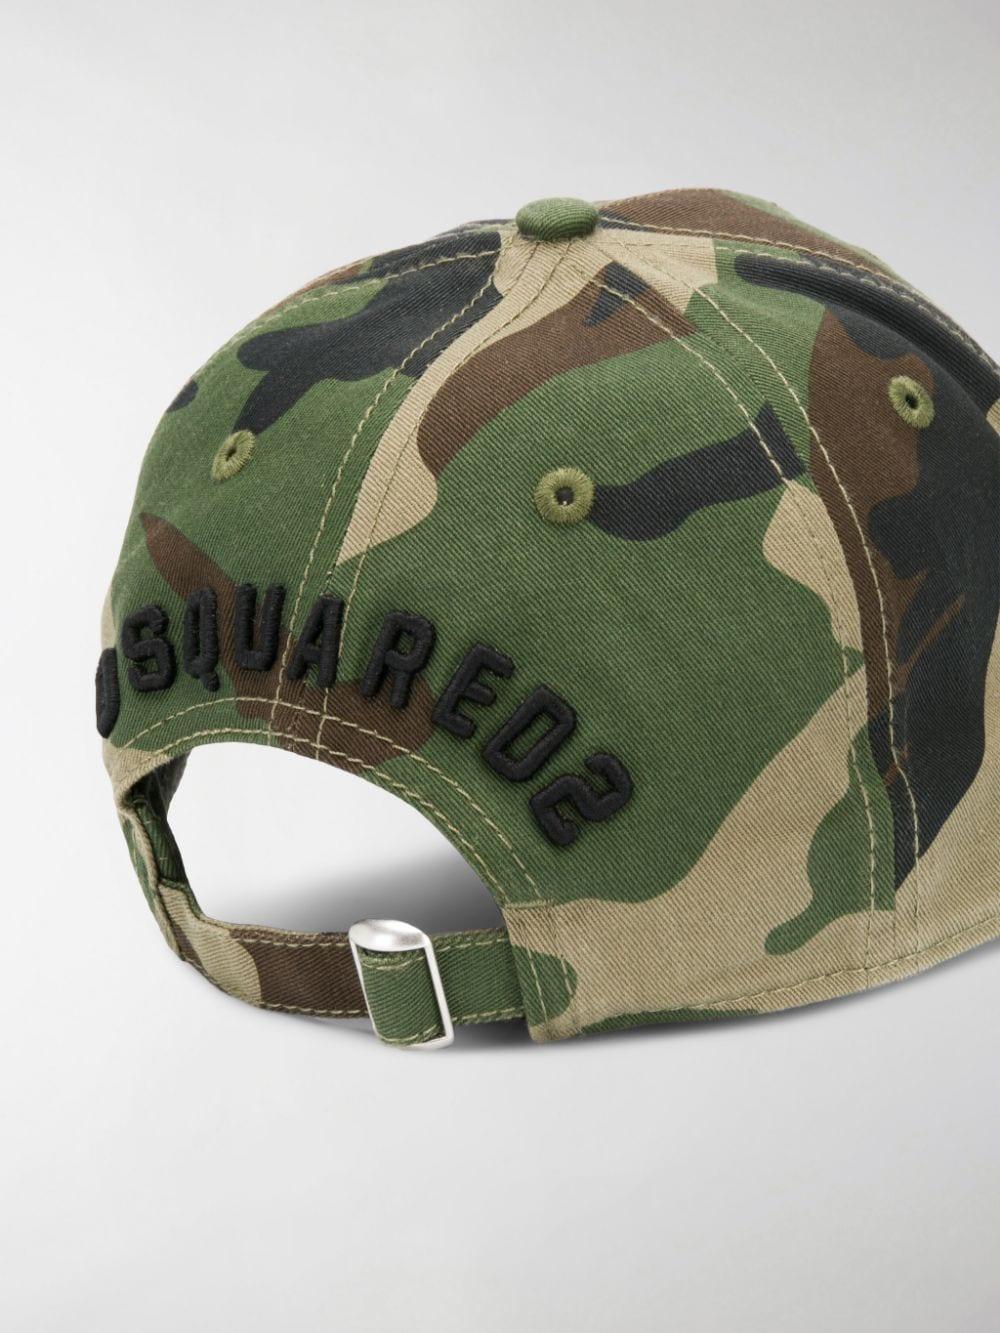 Dsquared2 Icon Camo Camouflage Baseball Cap Kappe Basebalkappe Hat Hut Cappy New